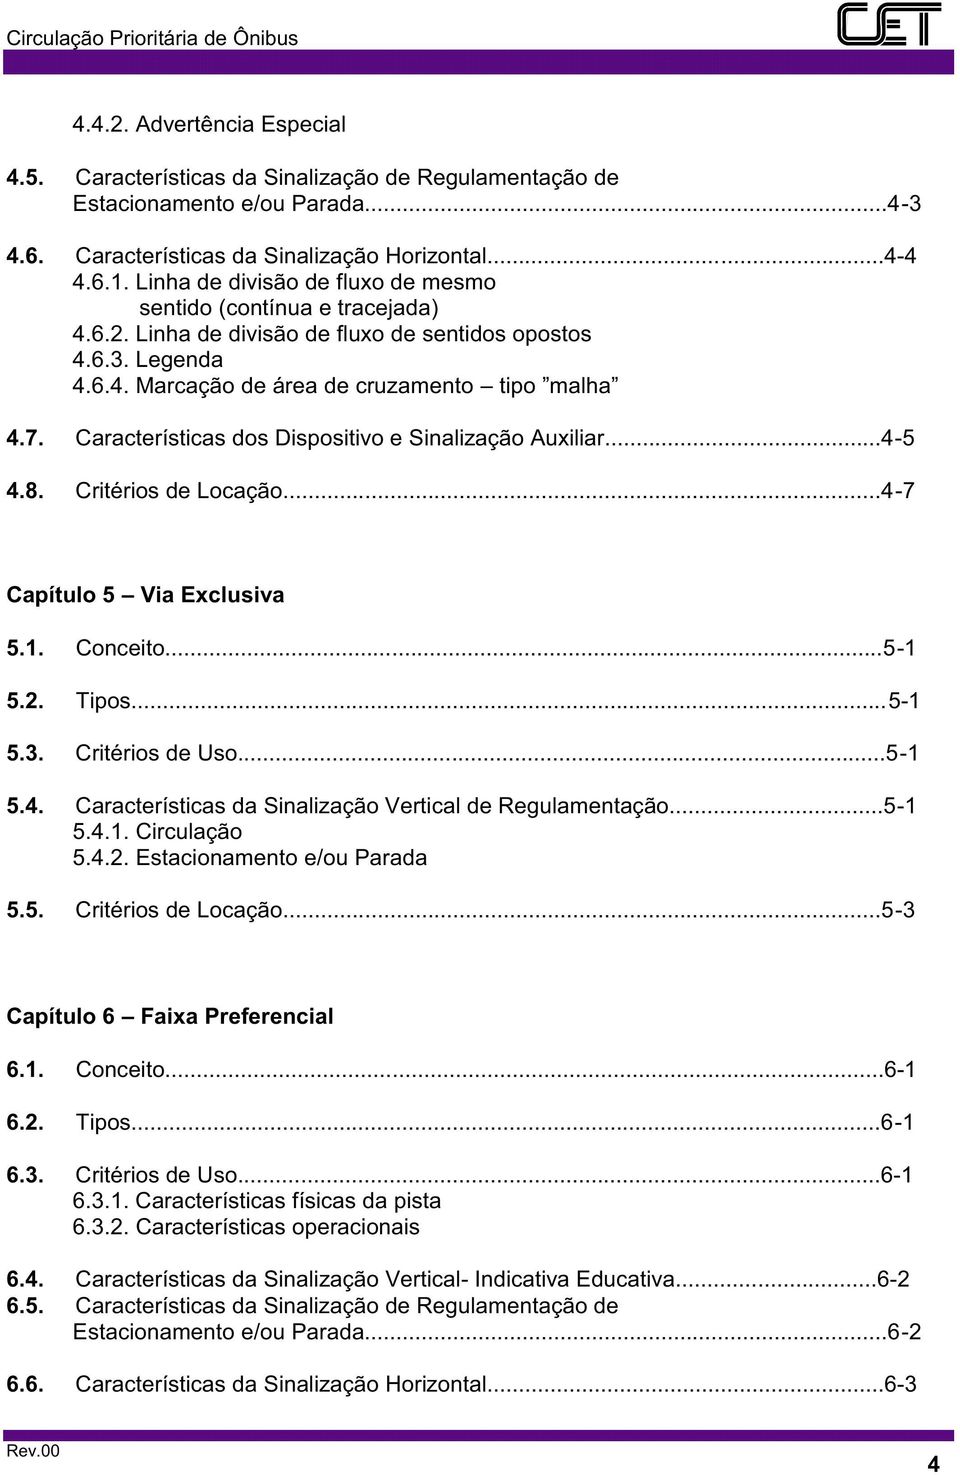 Características dos Dispositivo e Sinalização Auxiliar...4-5 4.8. Critérios de Locação...4-7 Capítulo 5 Via Exclusiva 5.1. Conceito...5-1 5.2. Tipos...5-1 5.3. Critérios de Uso...5-1 5.4. Características da Sinalização Vertical de Regulamentação.